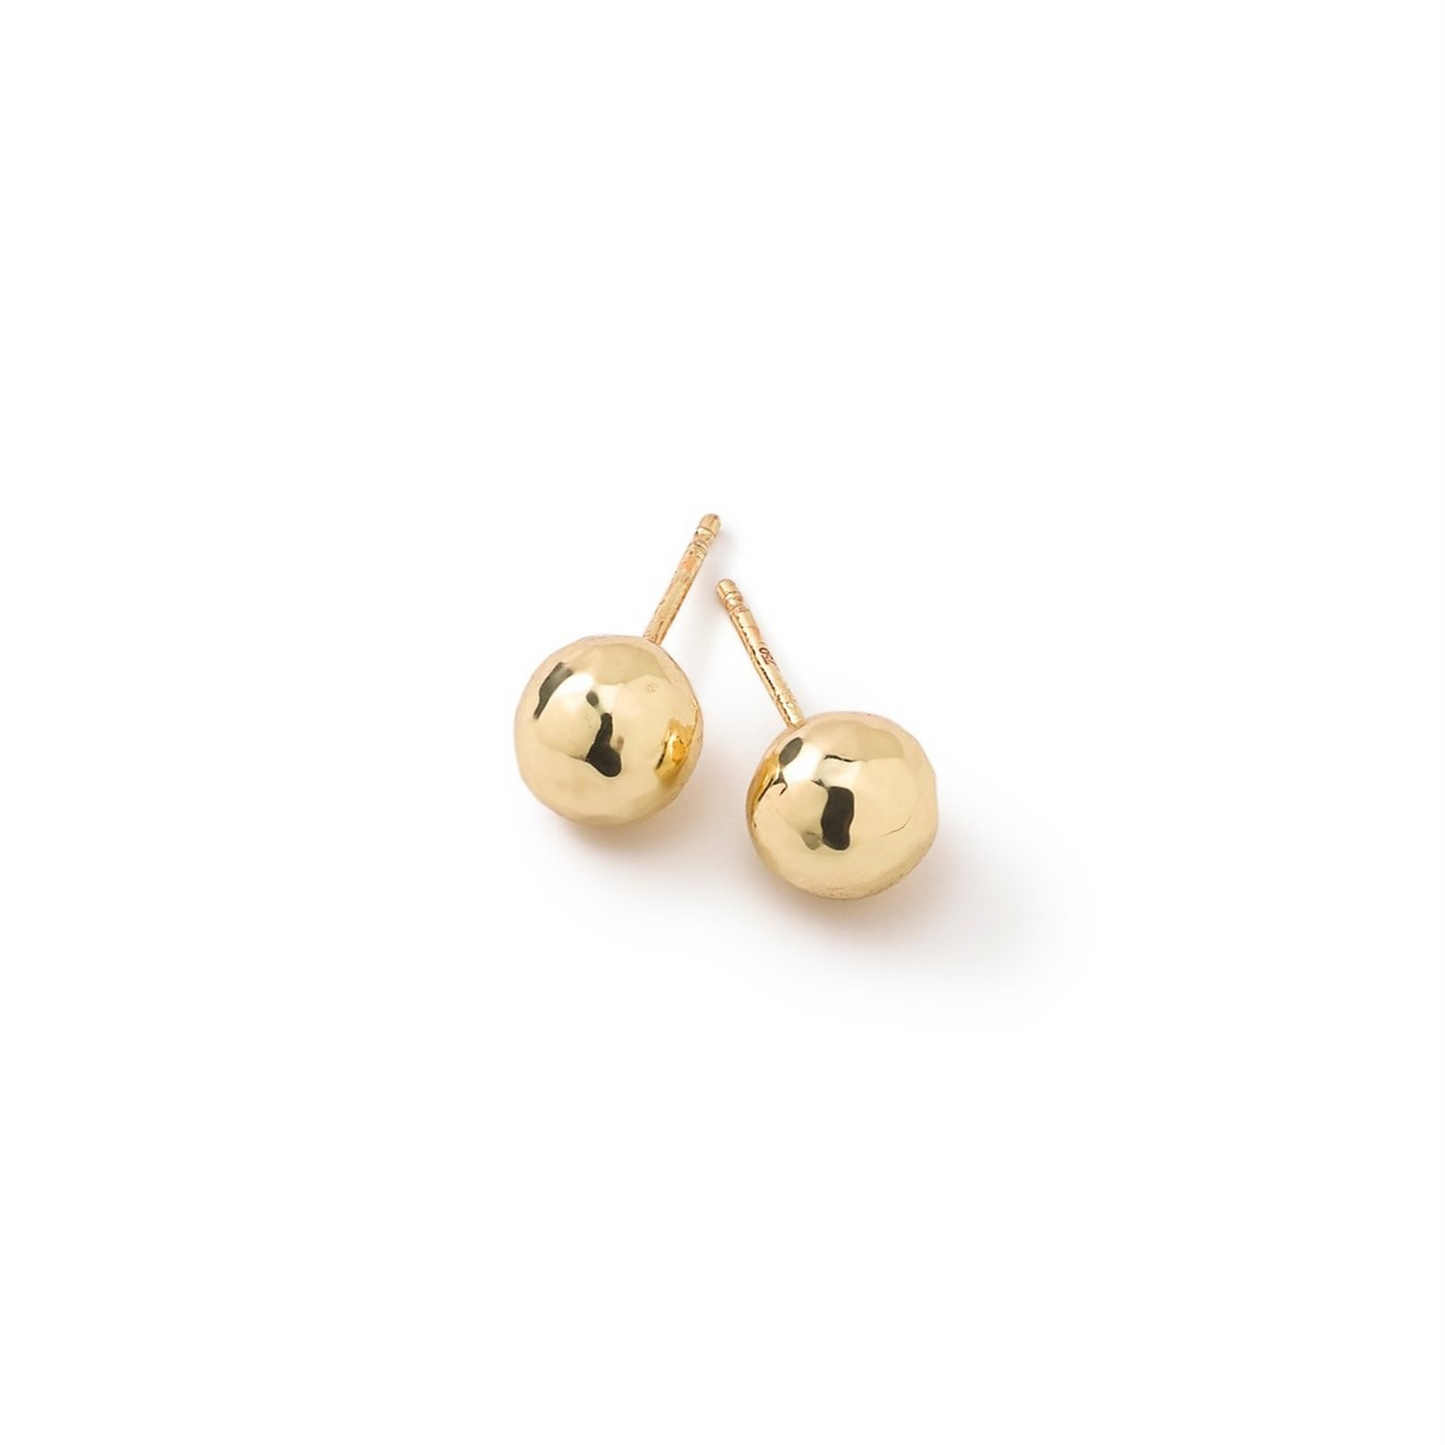 Ippolita Lightweight Small Hammered Ball Stud Earrings in 18K Gold